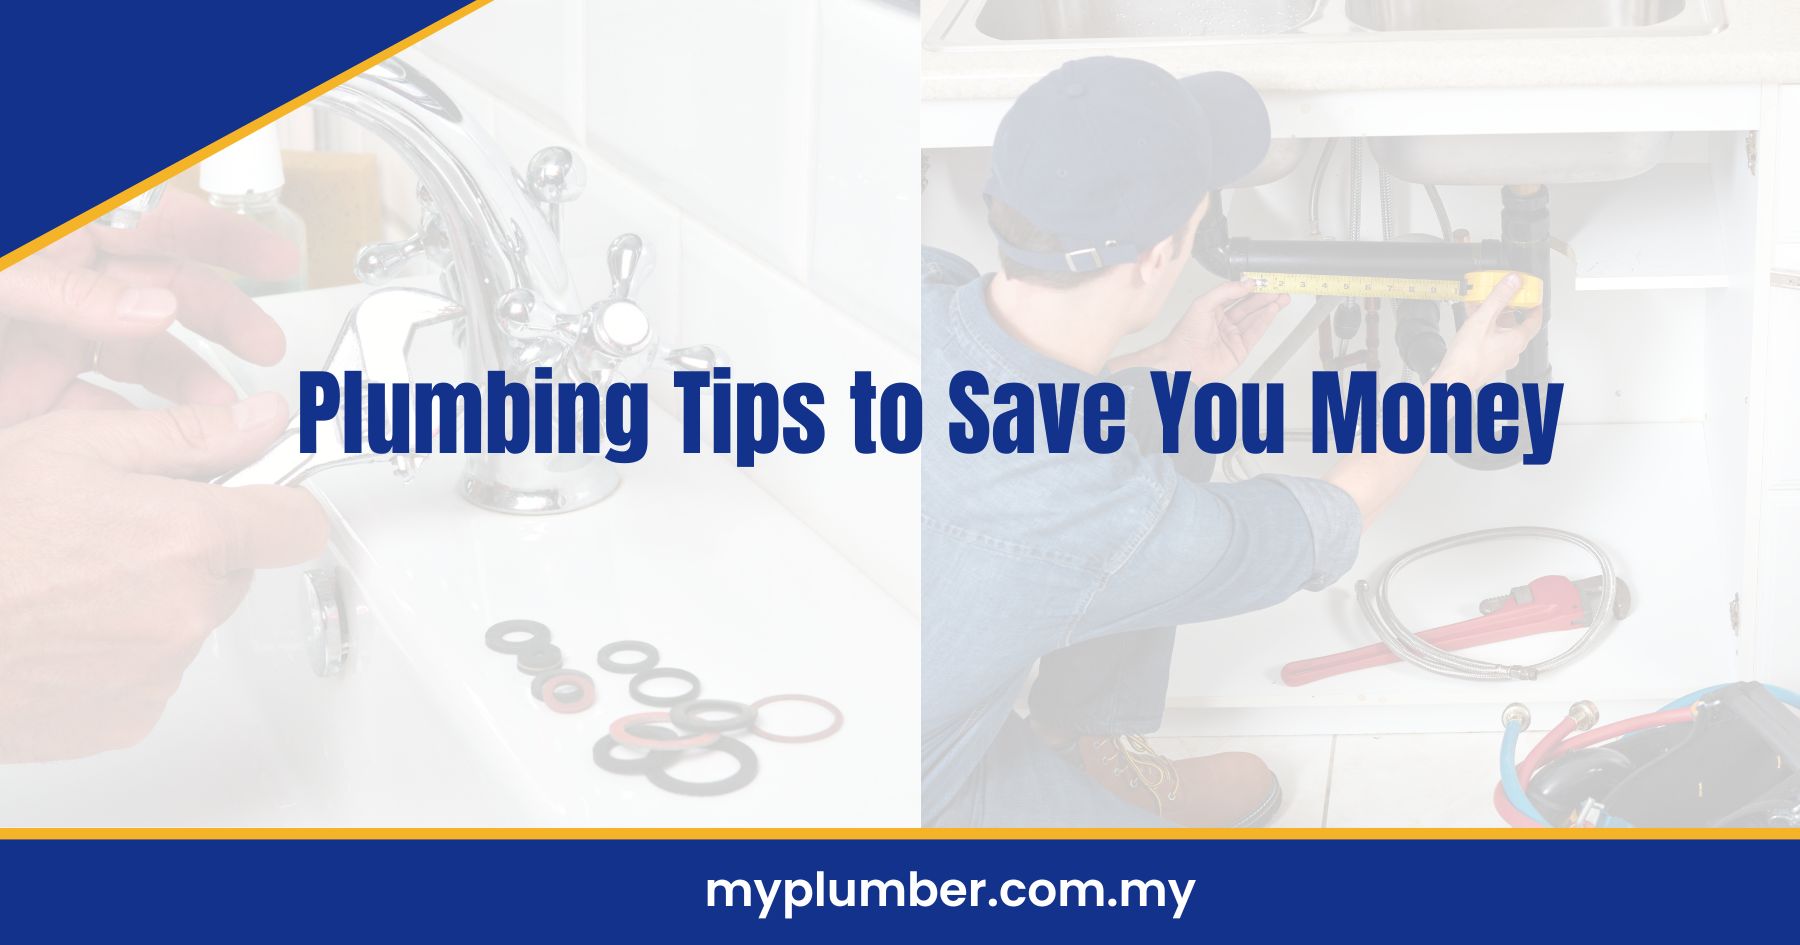 Plumbing Tips to Save You Money